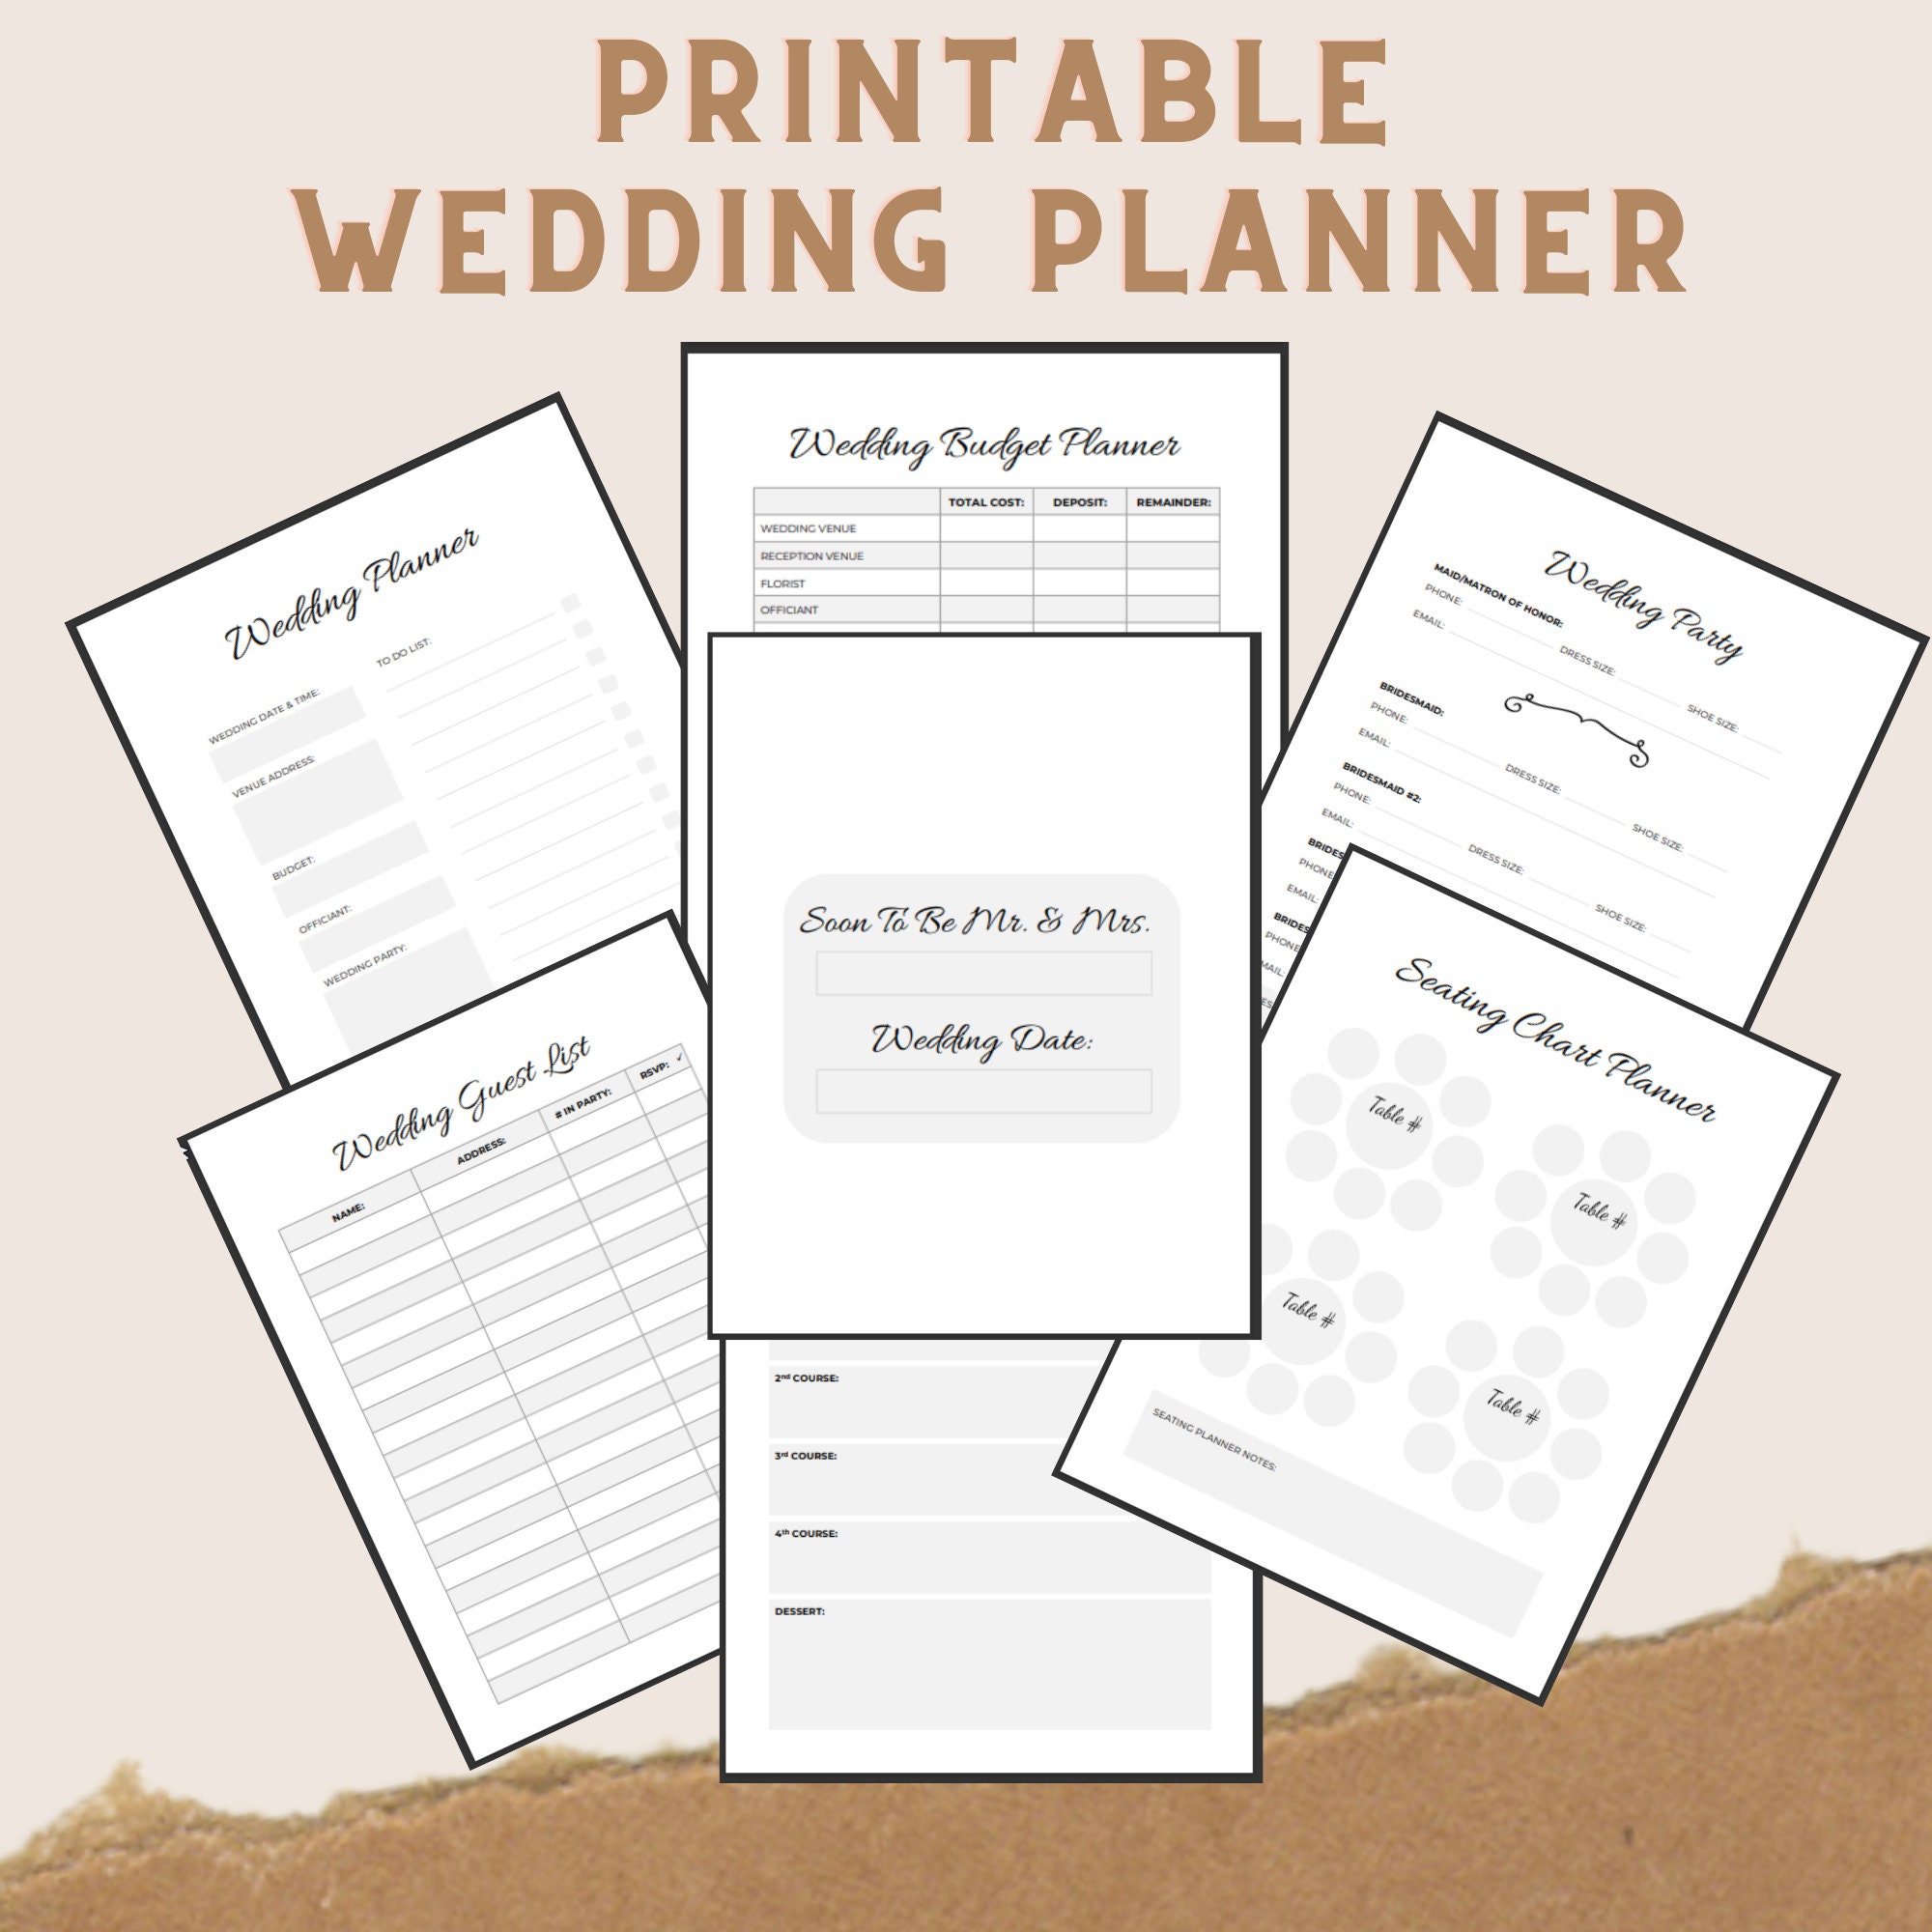 printable-wedding-planner-book-ubicaciondepersonas-cdmx-gob-mx